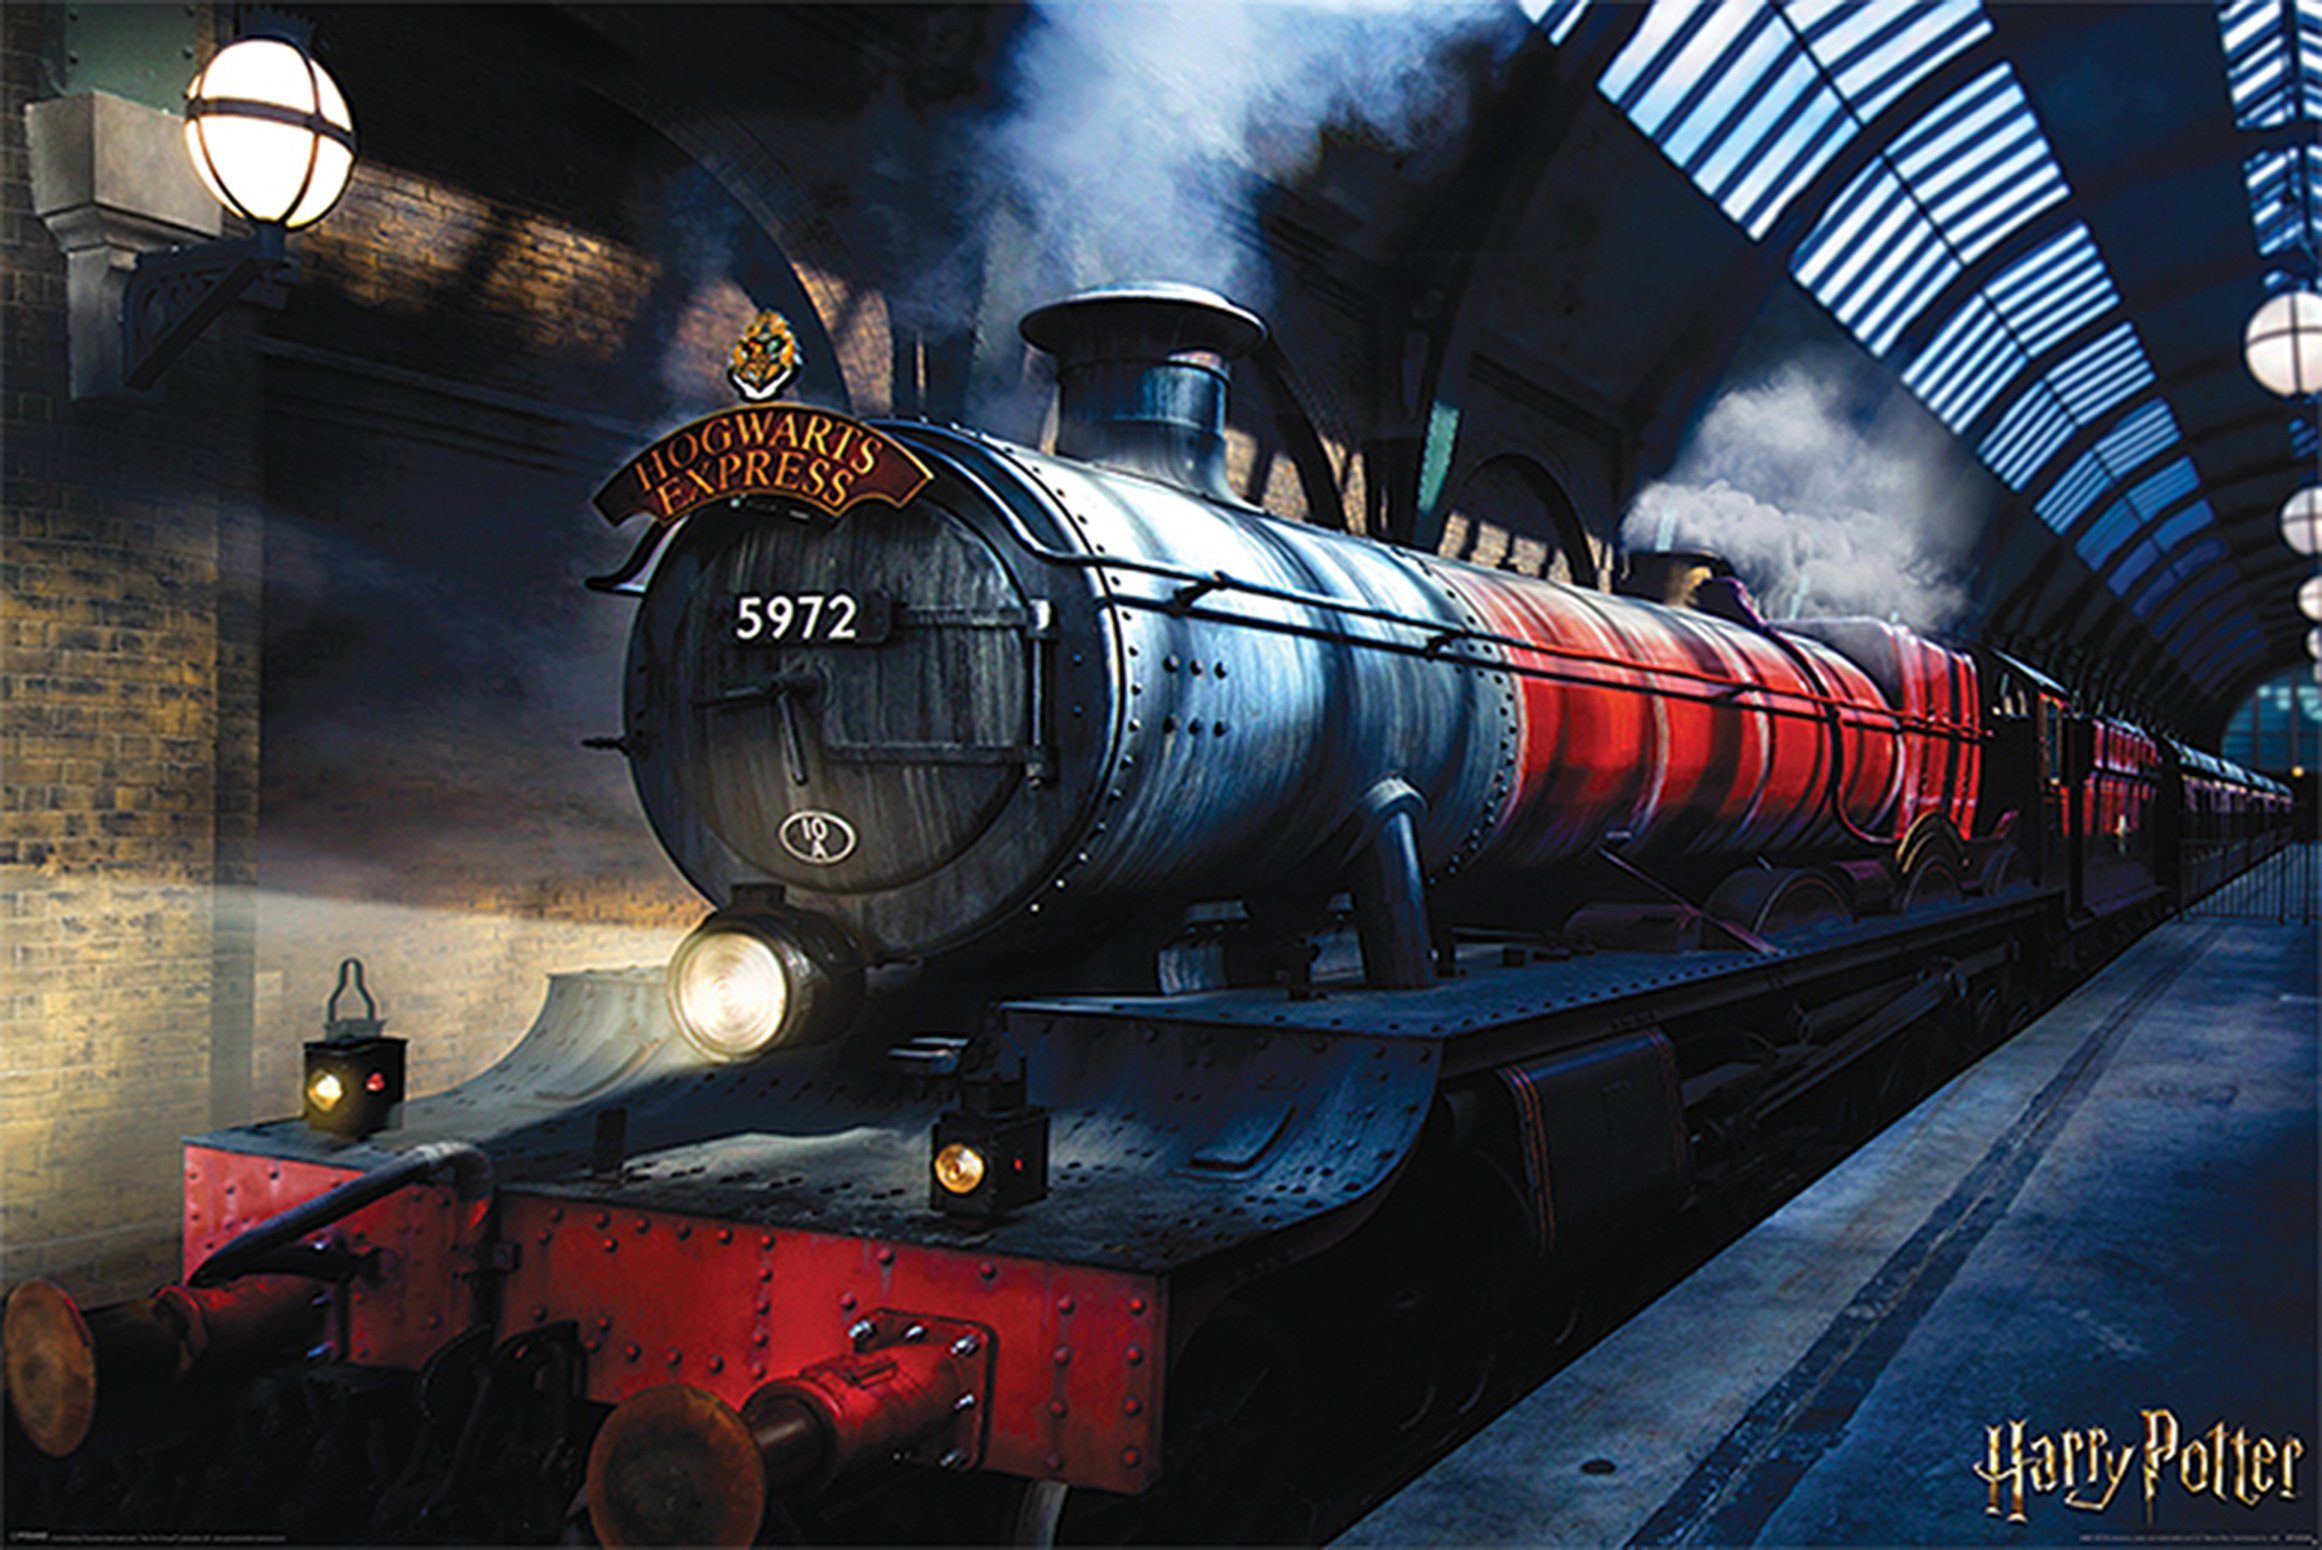 PYRAMID Poster Harry Potter Poster Hogwarts Express 91,5 x 61 cm